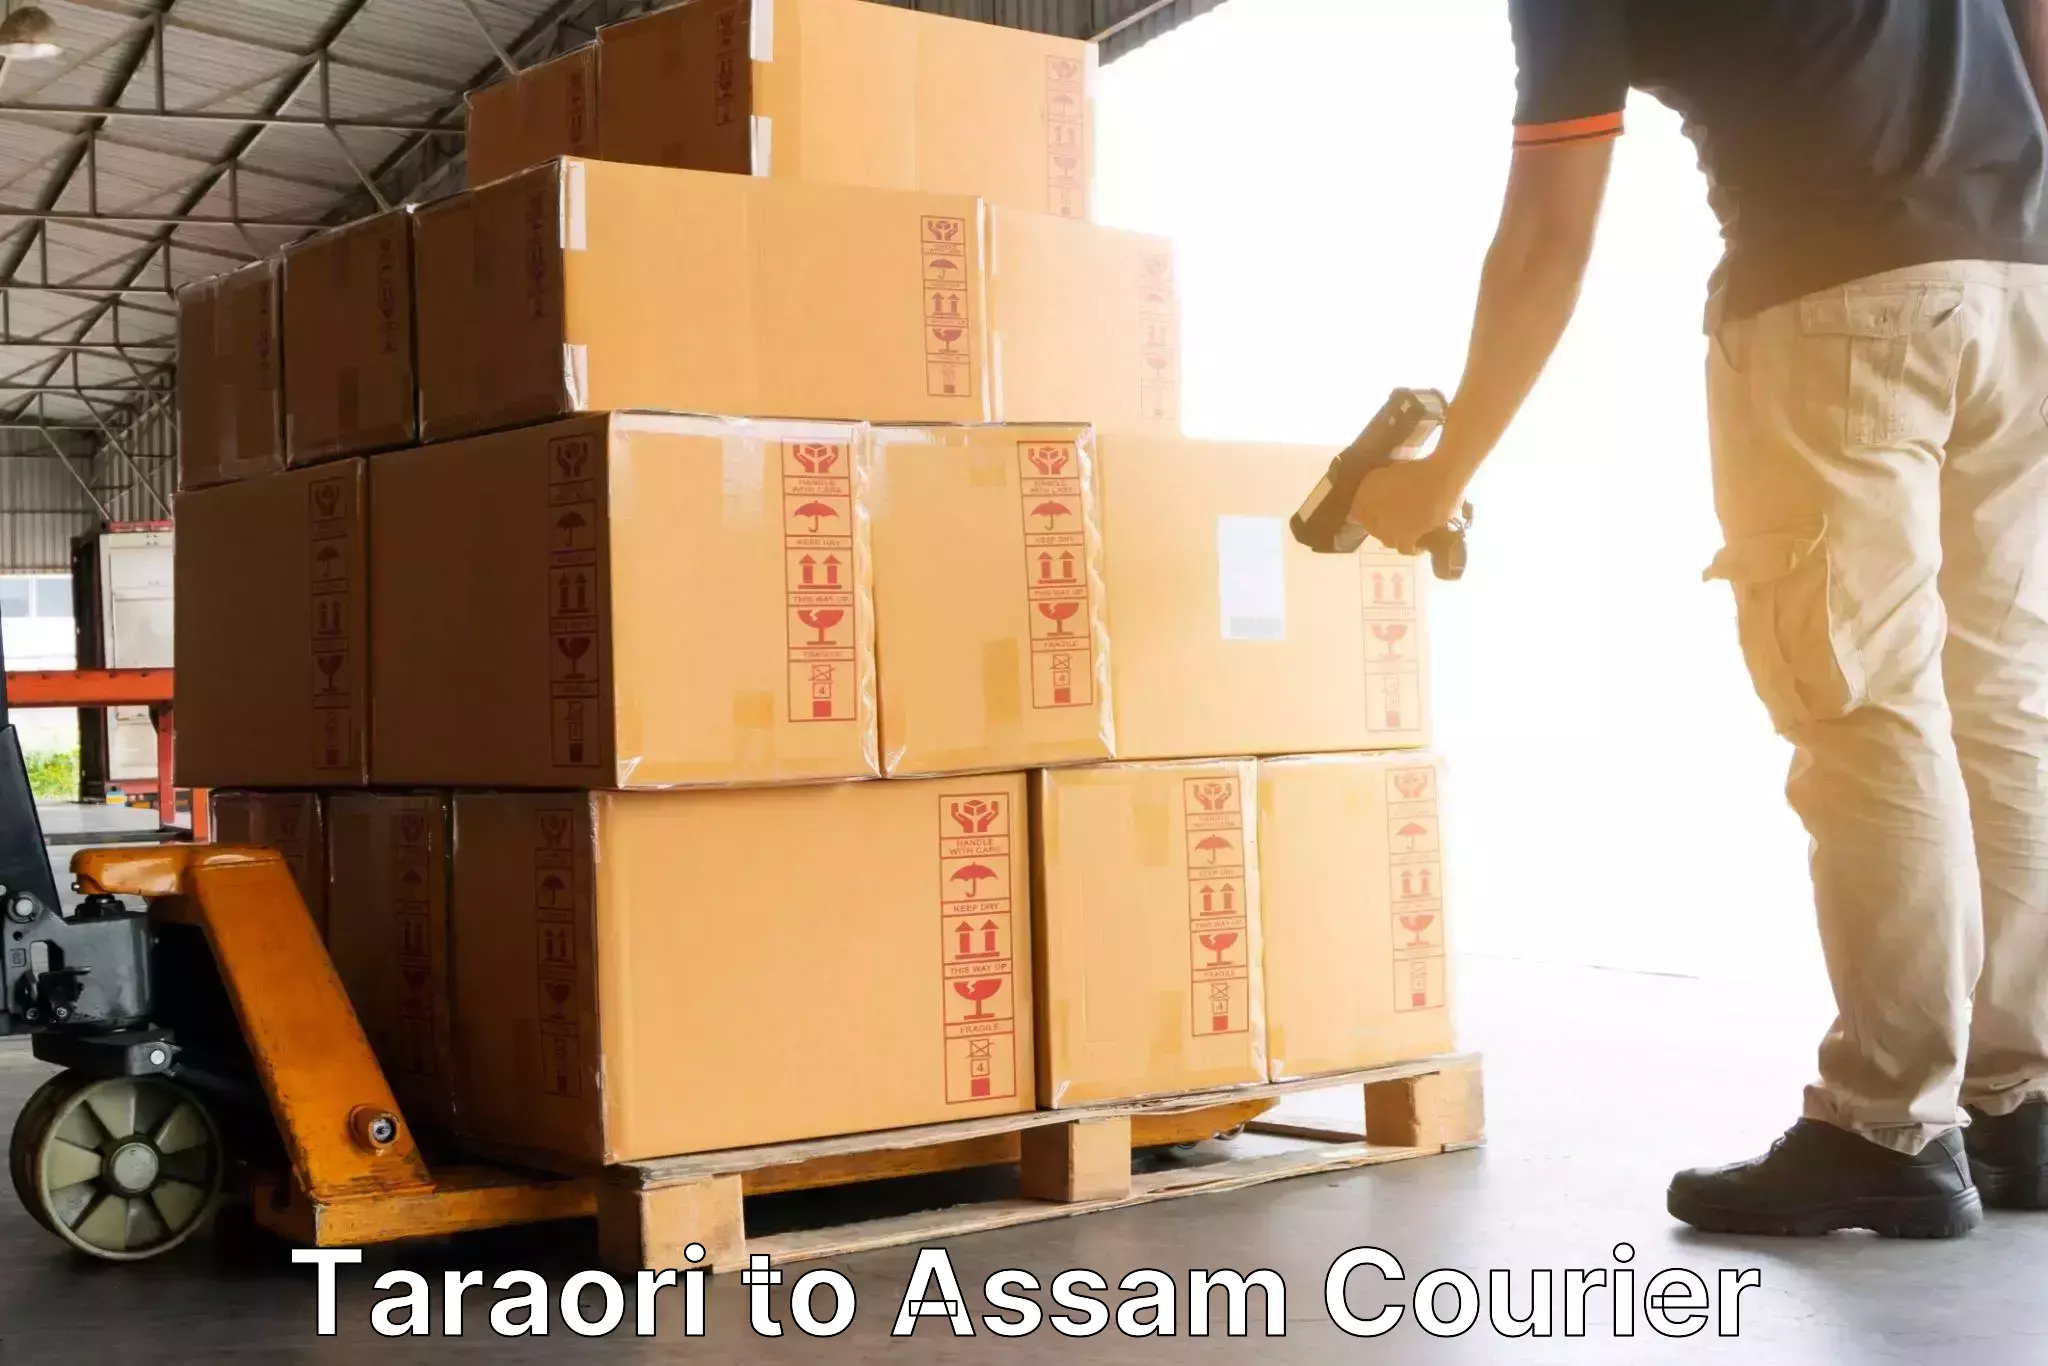 Courier services in Taraori to Amoni